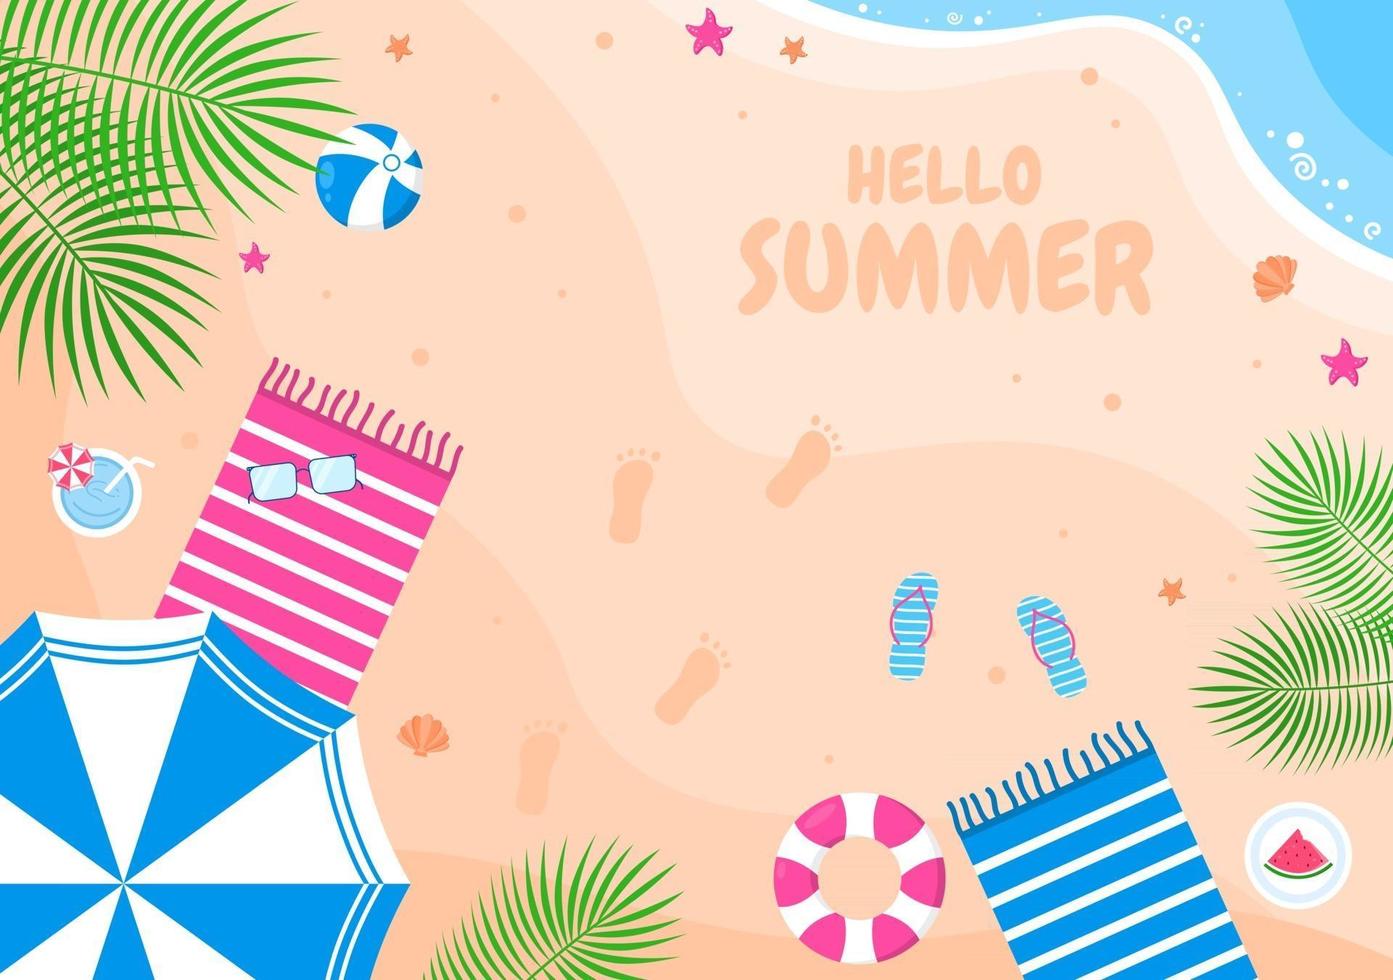 Happy Summer Time on Beach Illustration vector